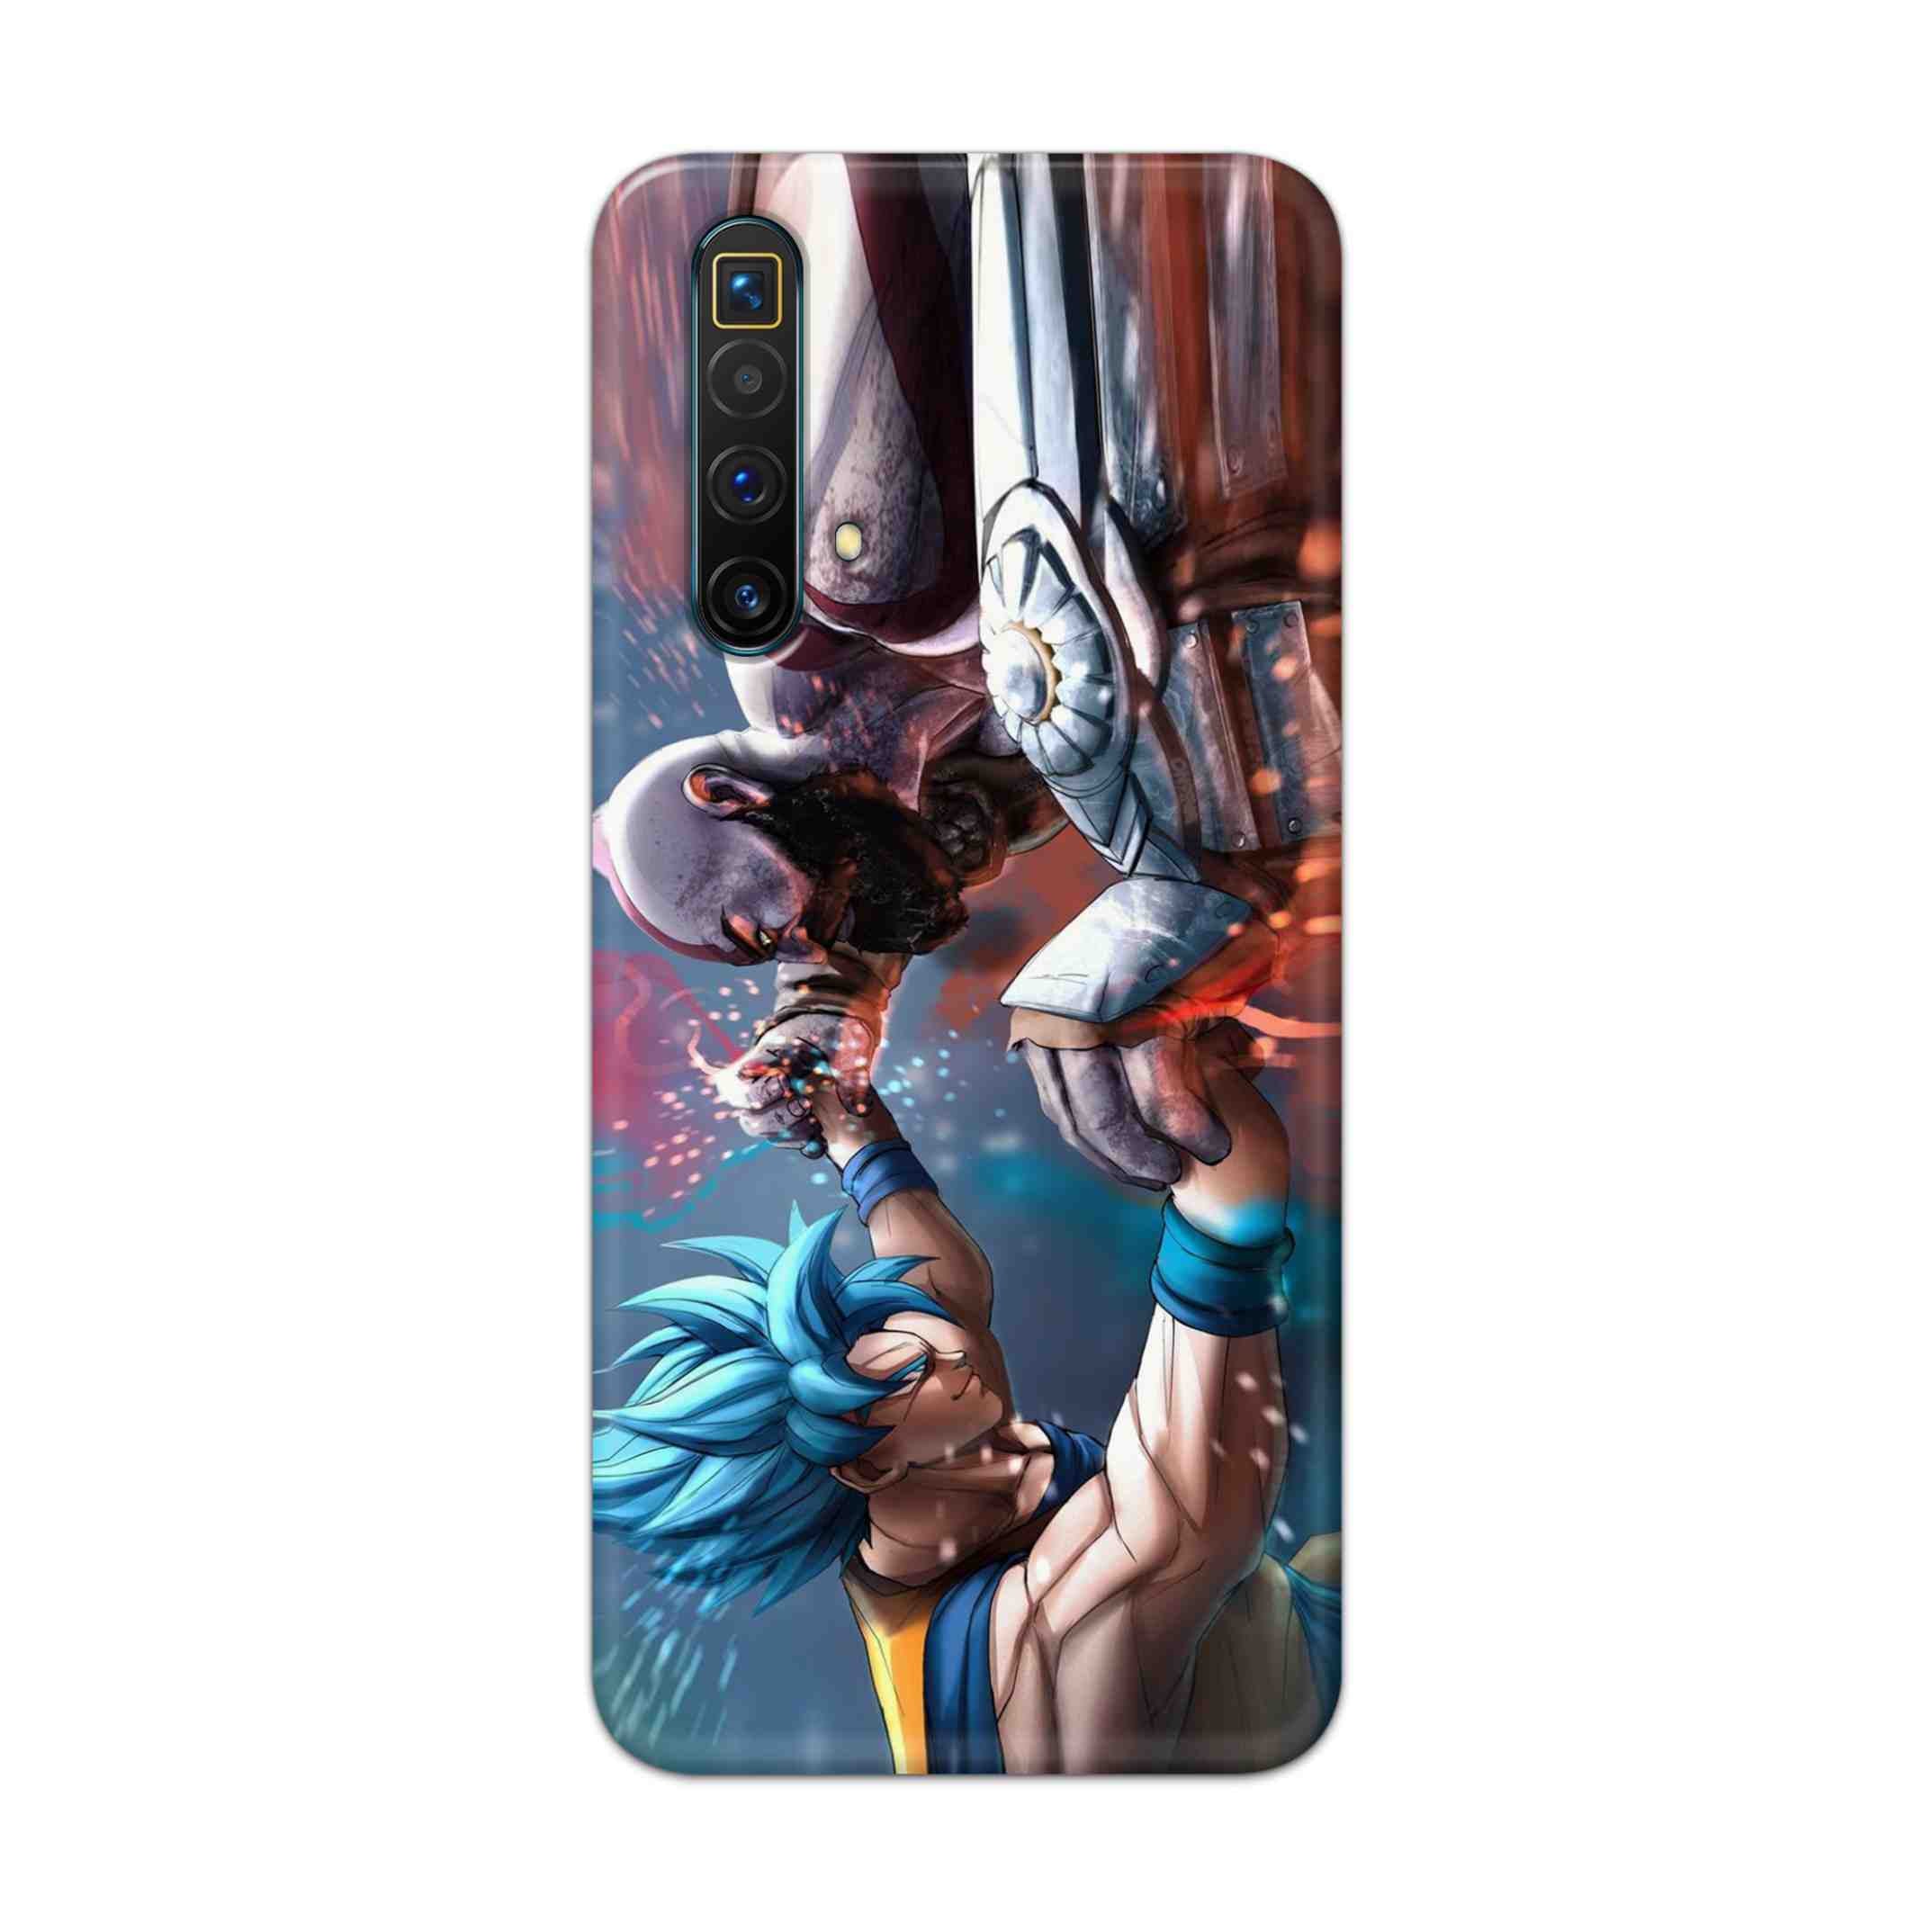 Buy Goku Vs Kratos Hard Back Mobile Phone Case Cover For Realme X3 Superzoom Online